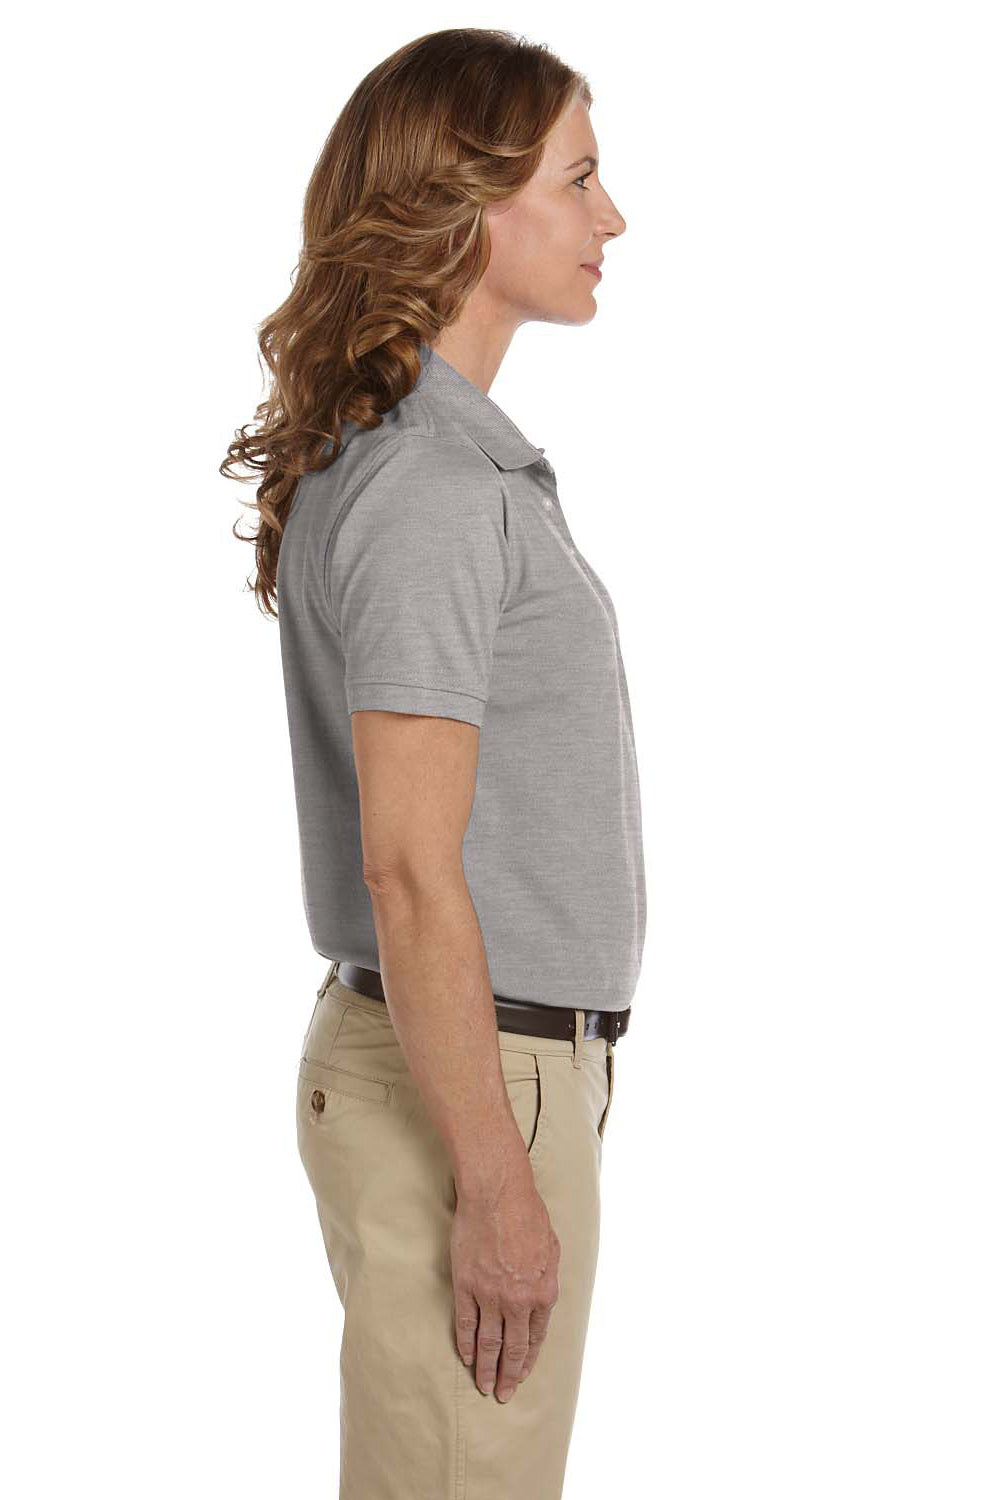 Harriton M265W Womens Easy Blend Wrinkle Resistant Short Sleeve Polo Shirt Heather Grey Side